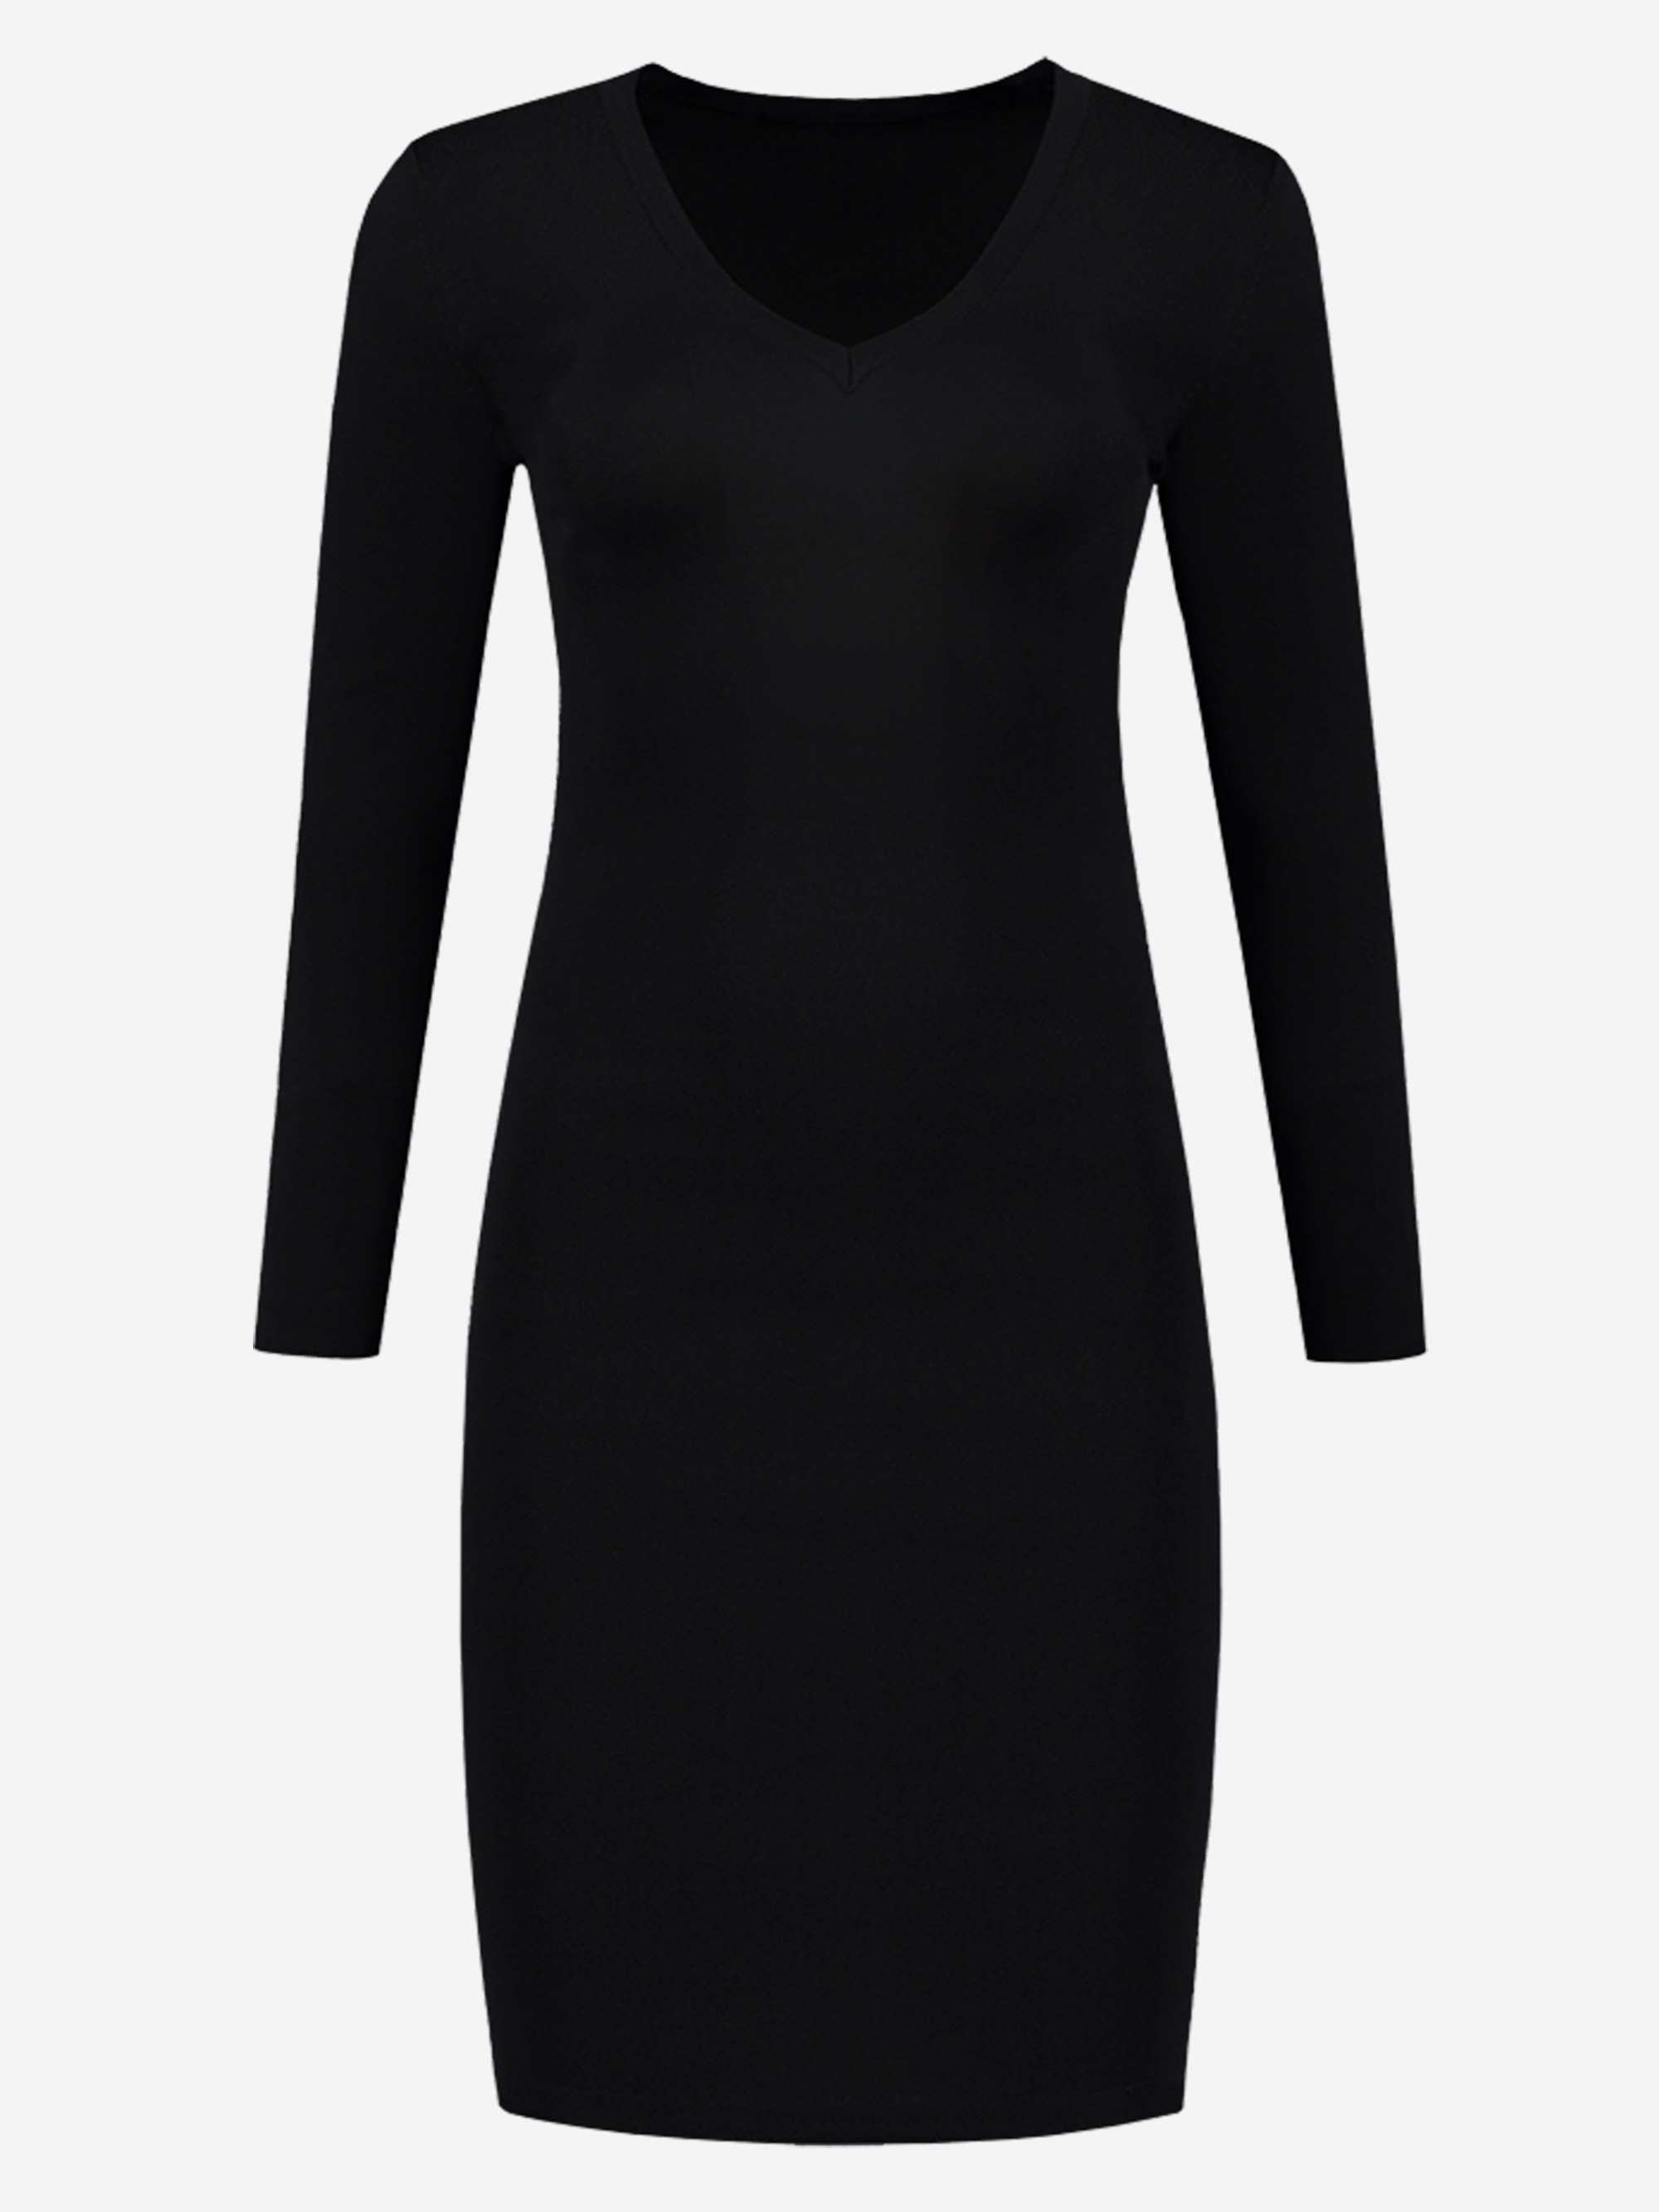 Black dress with v-neckline